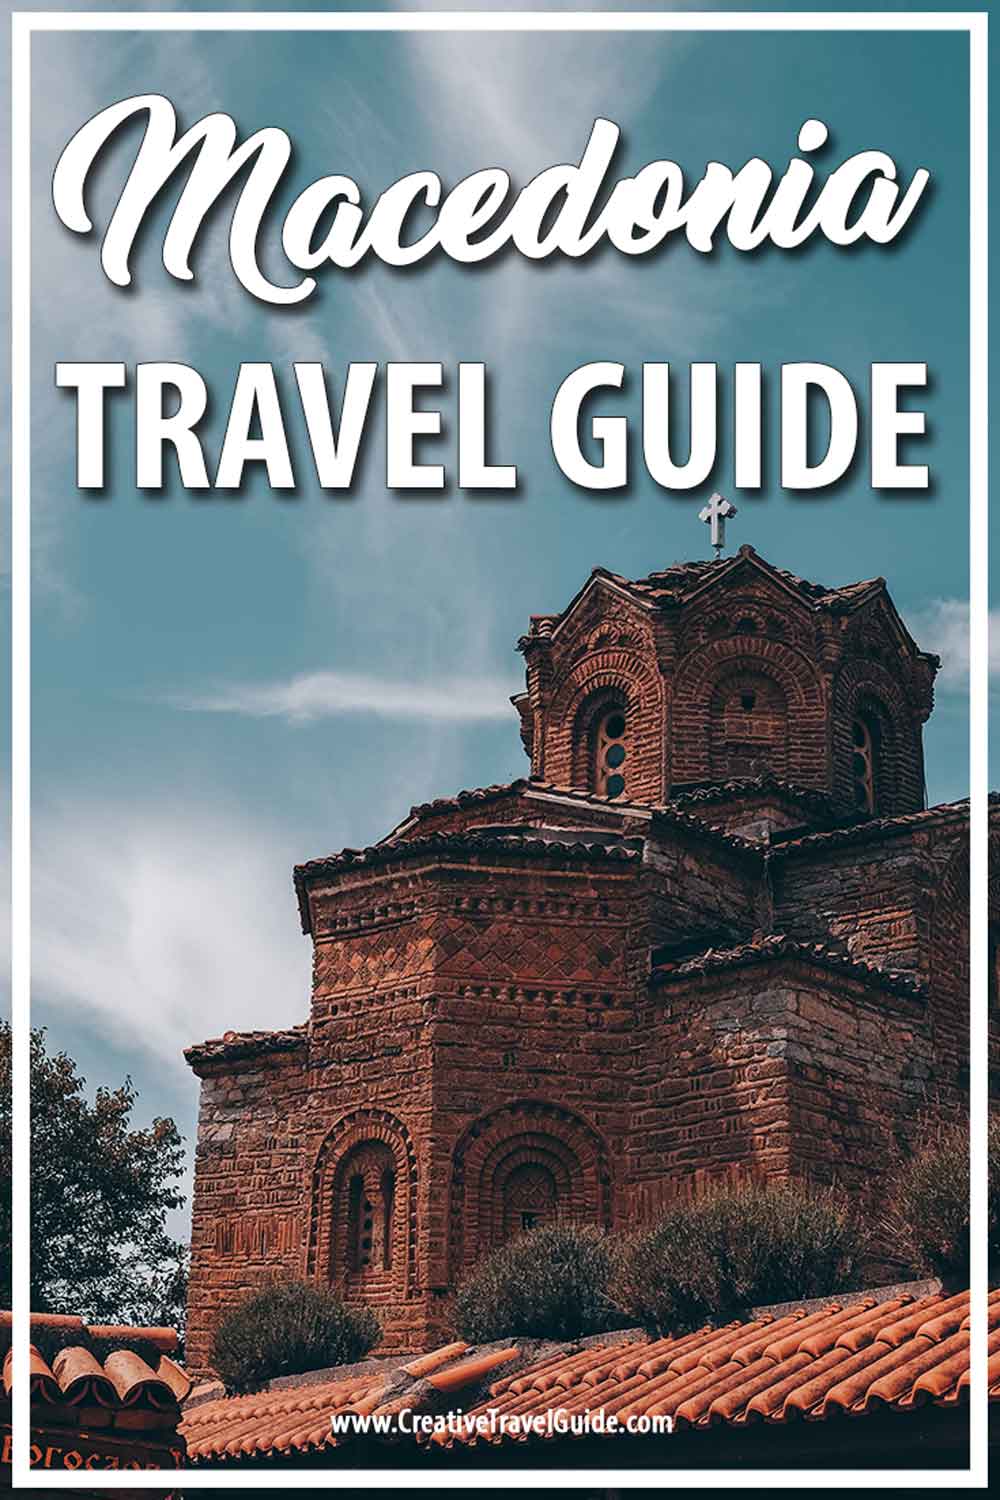 Macedonia travel guide